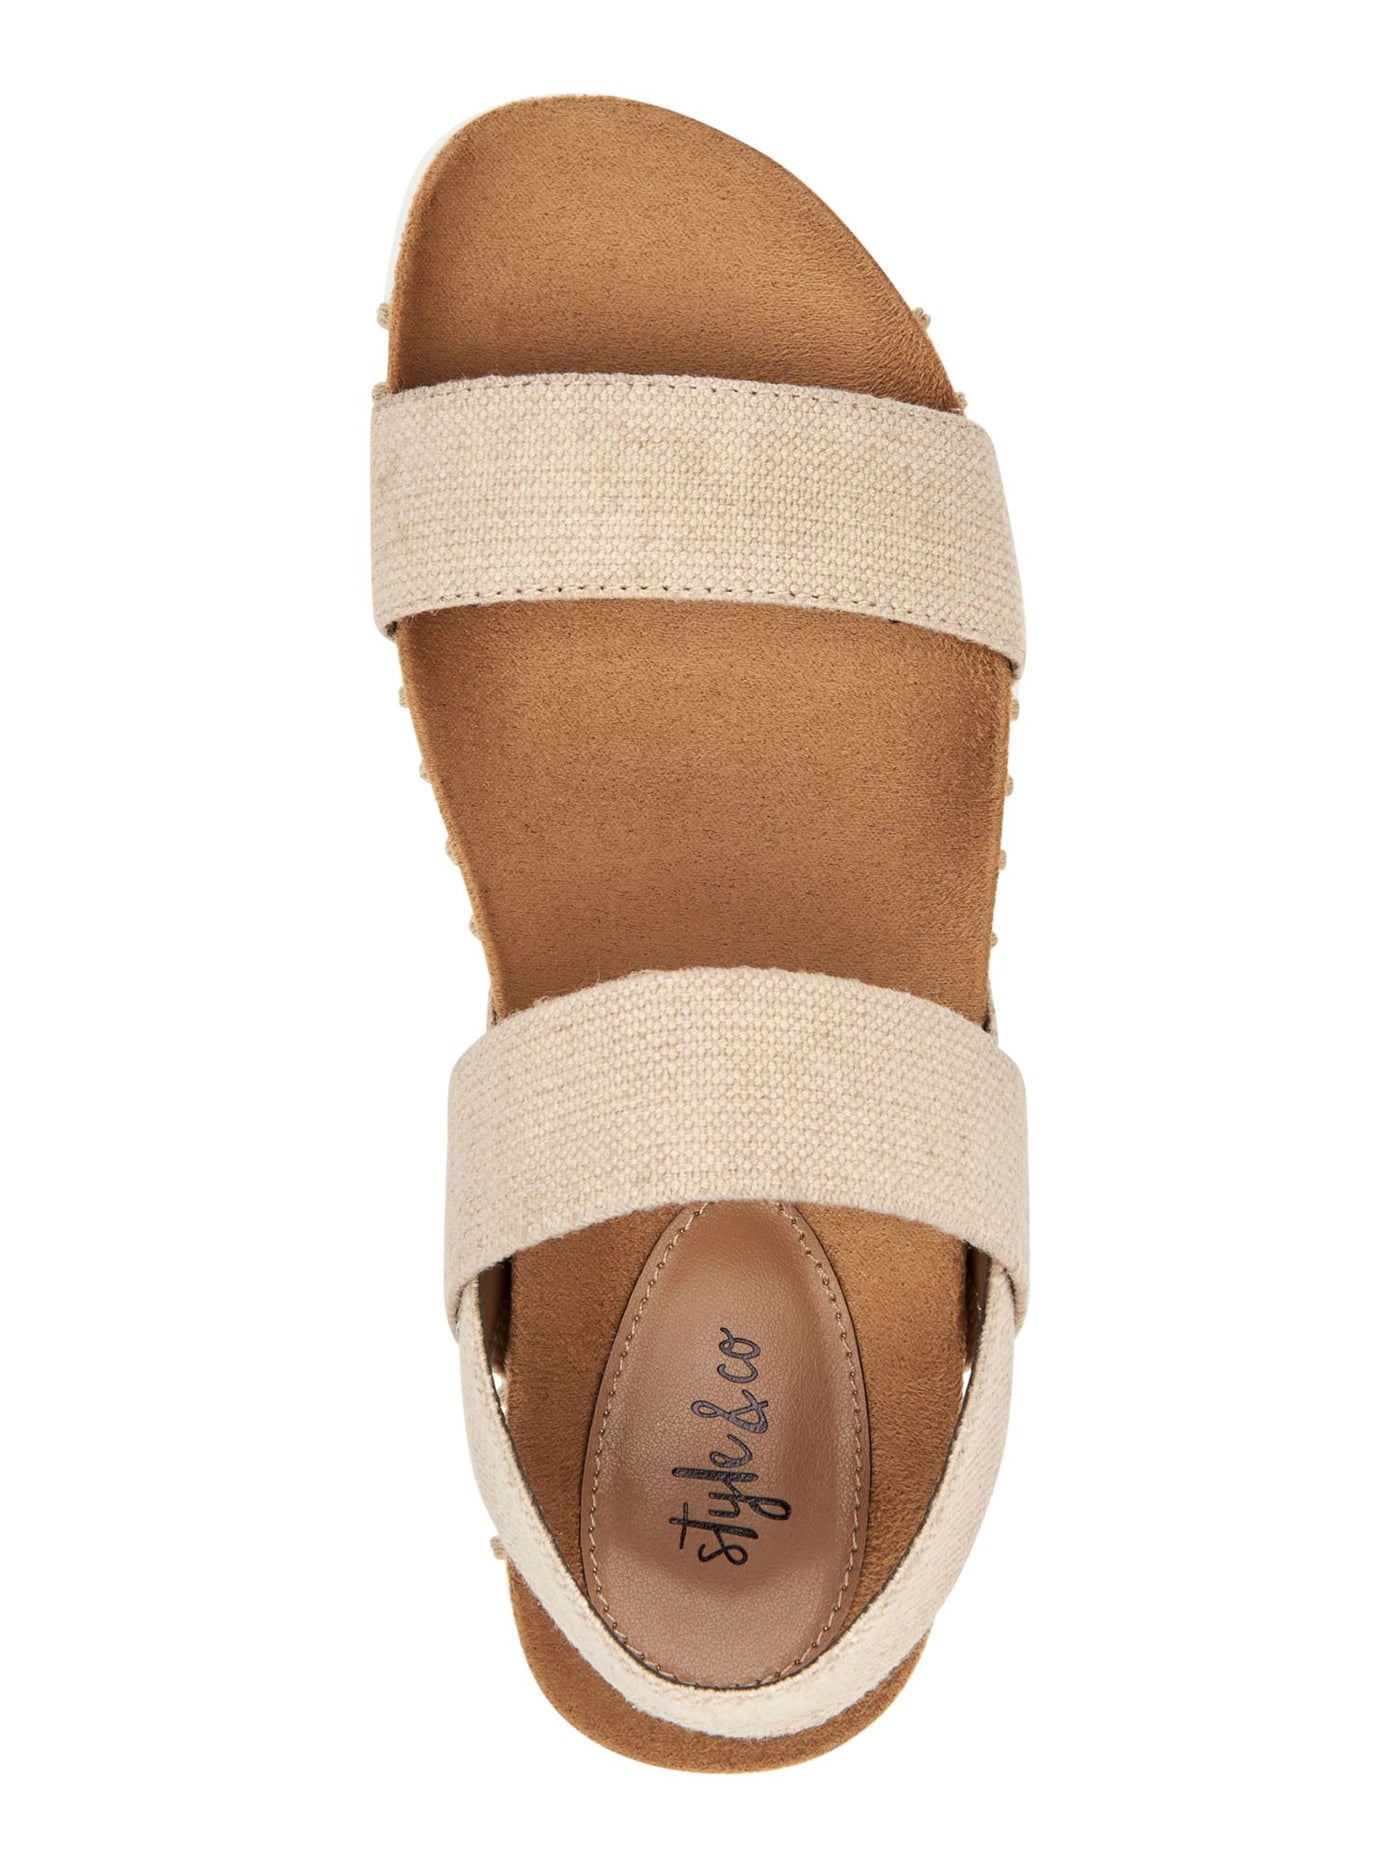 STYLE & COMPANY Womens Beige 1" Platform Stretch Comfort Milaa Round Toe Wedge Slip On Slingback Sandal 7.5 M